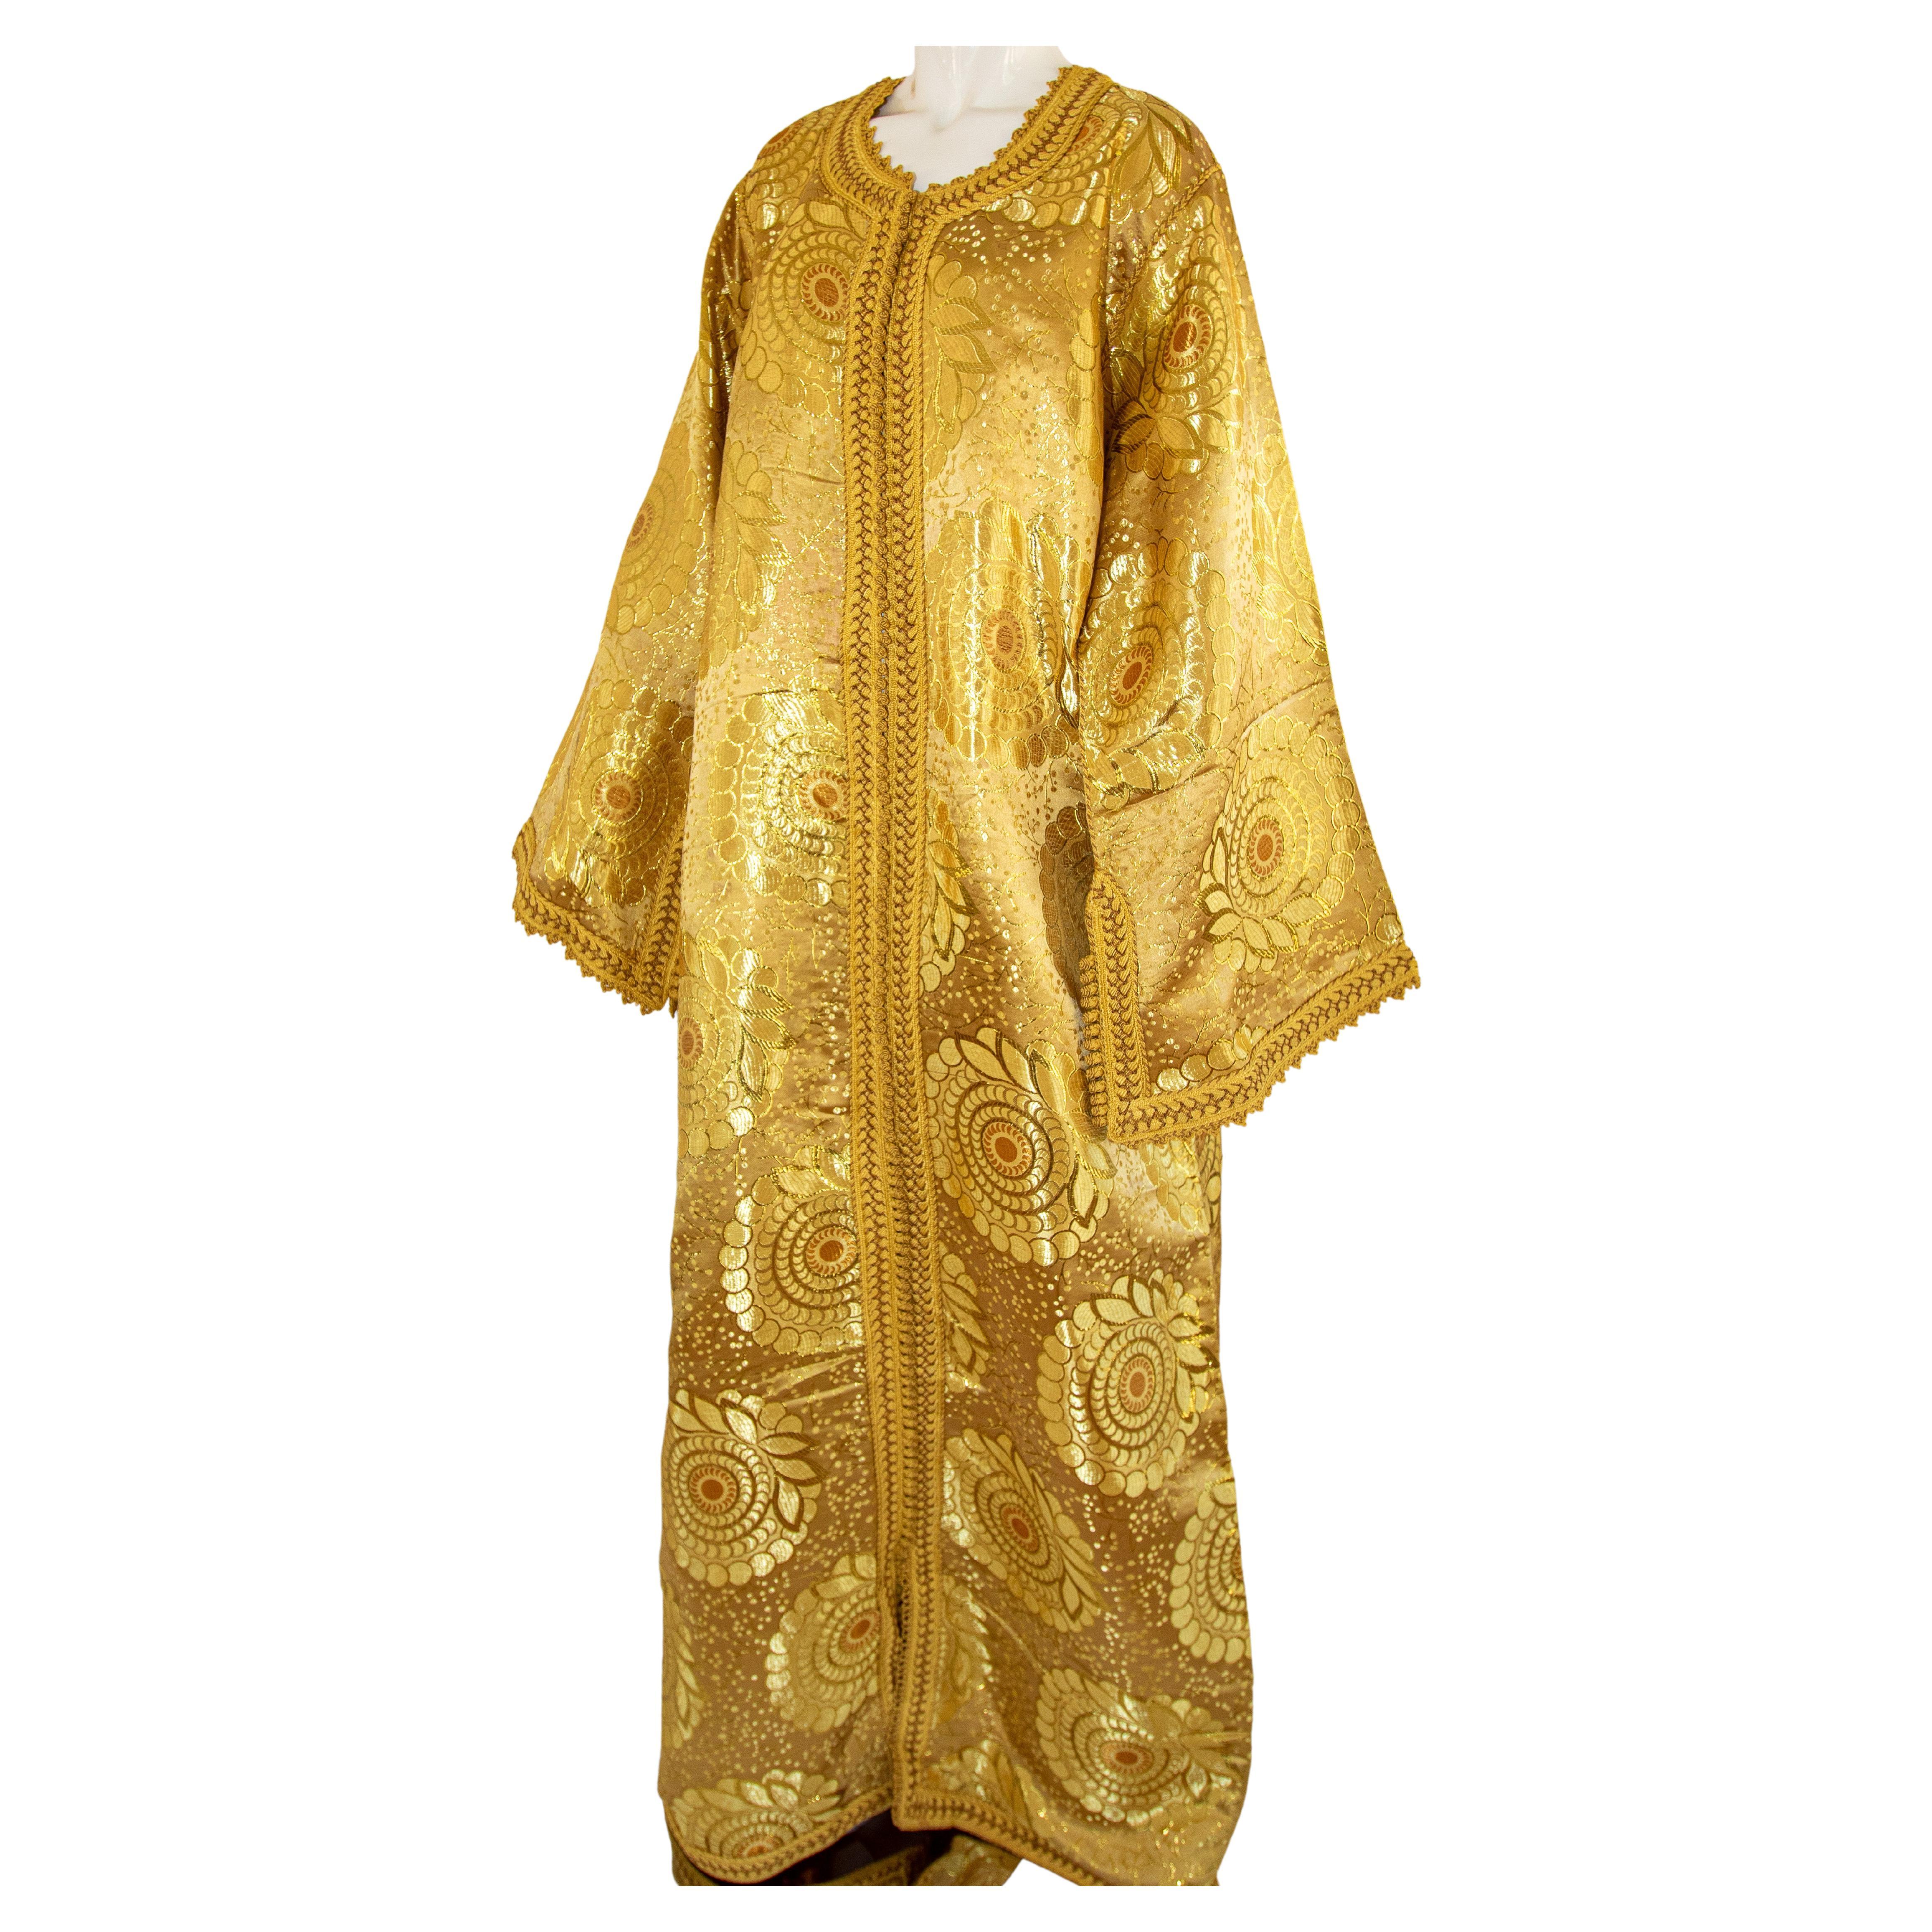 Robe caftan marocaine vintage longue en brocart doré en forme de caftan, taille L à XL en vente